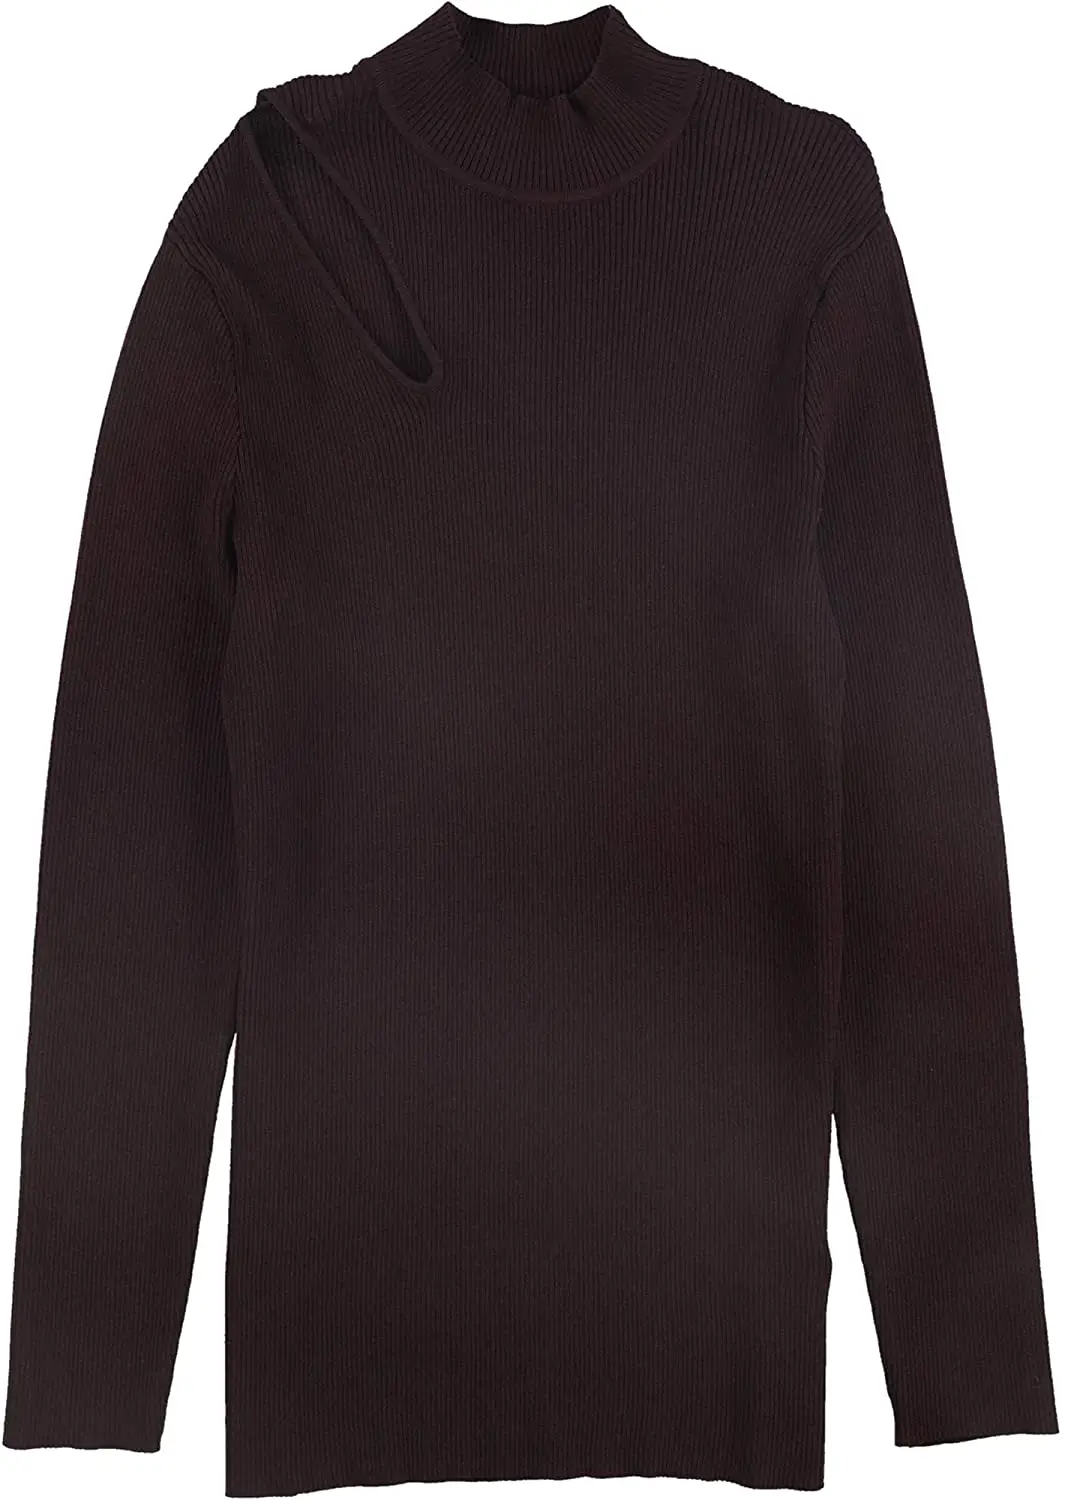 Plus Size Nylon Sweater 01